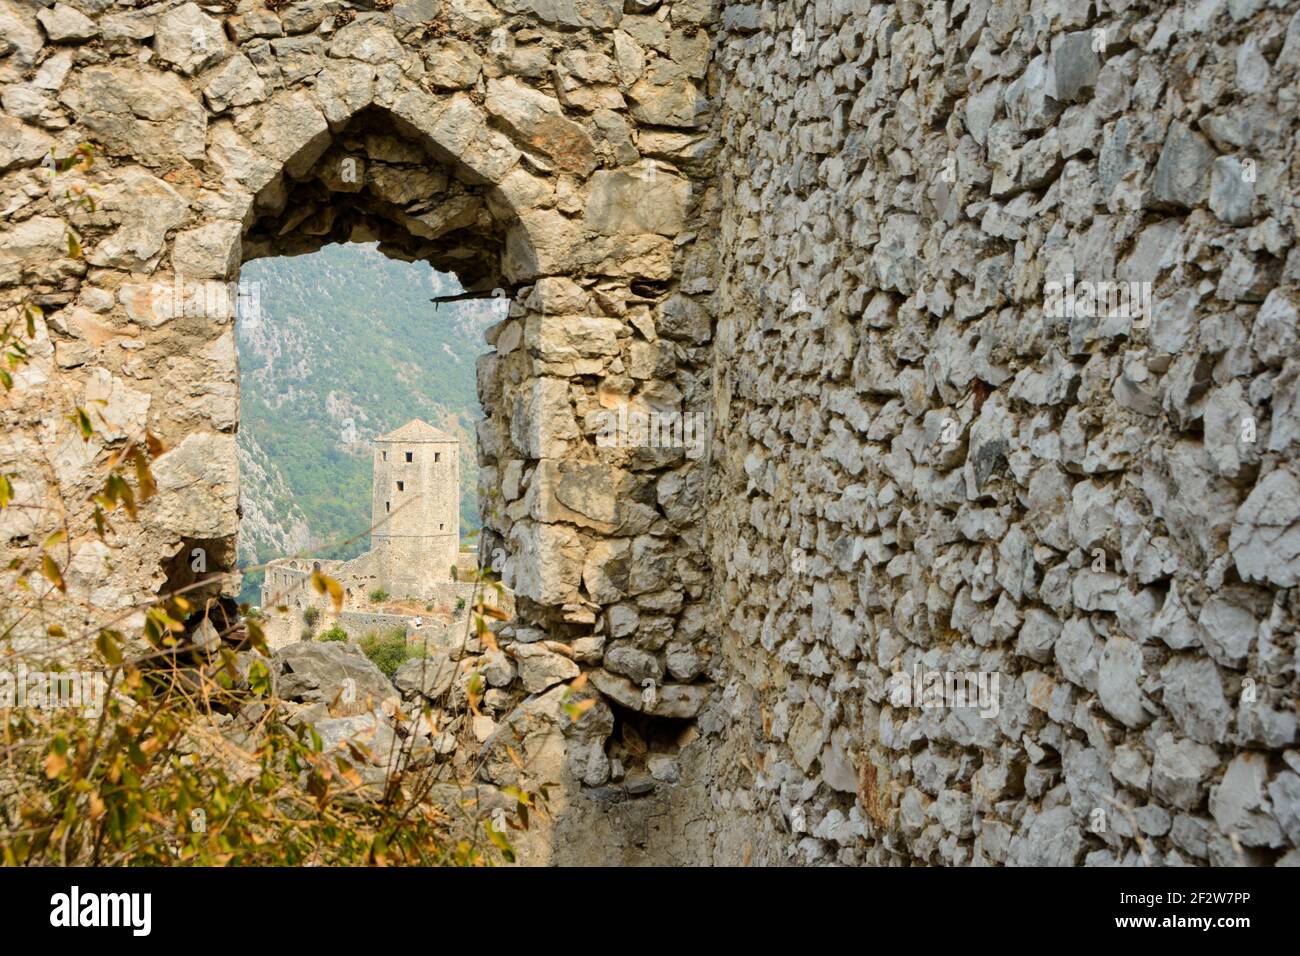 Vista sulla torre della cittadella medievale Pocitelj in Bosnia Erzegovina. Foto Stock